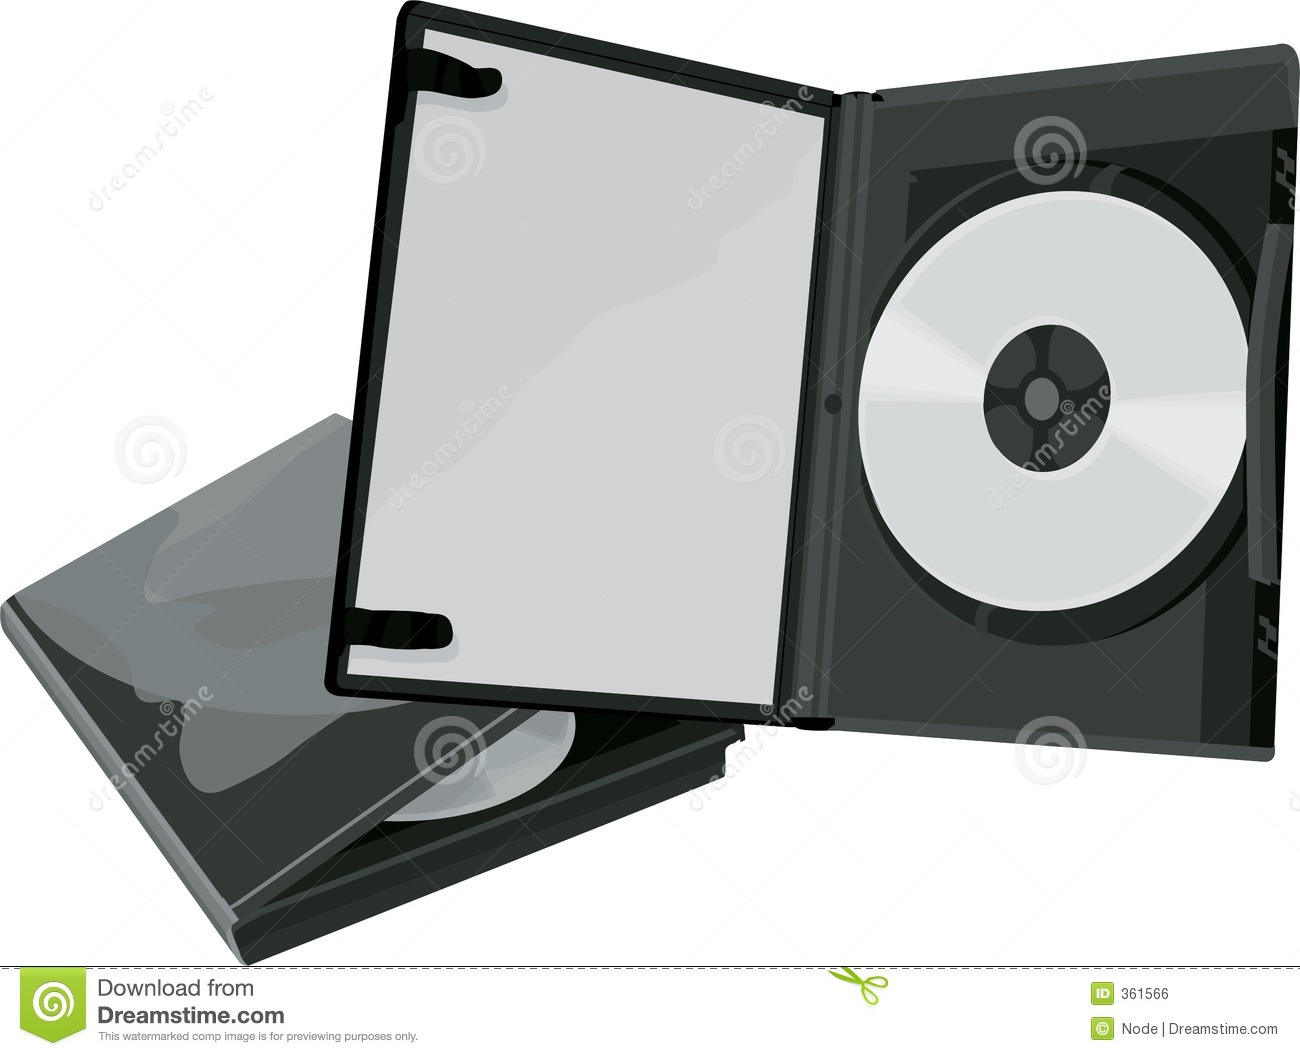 Dvd Disk Clip Art